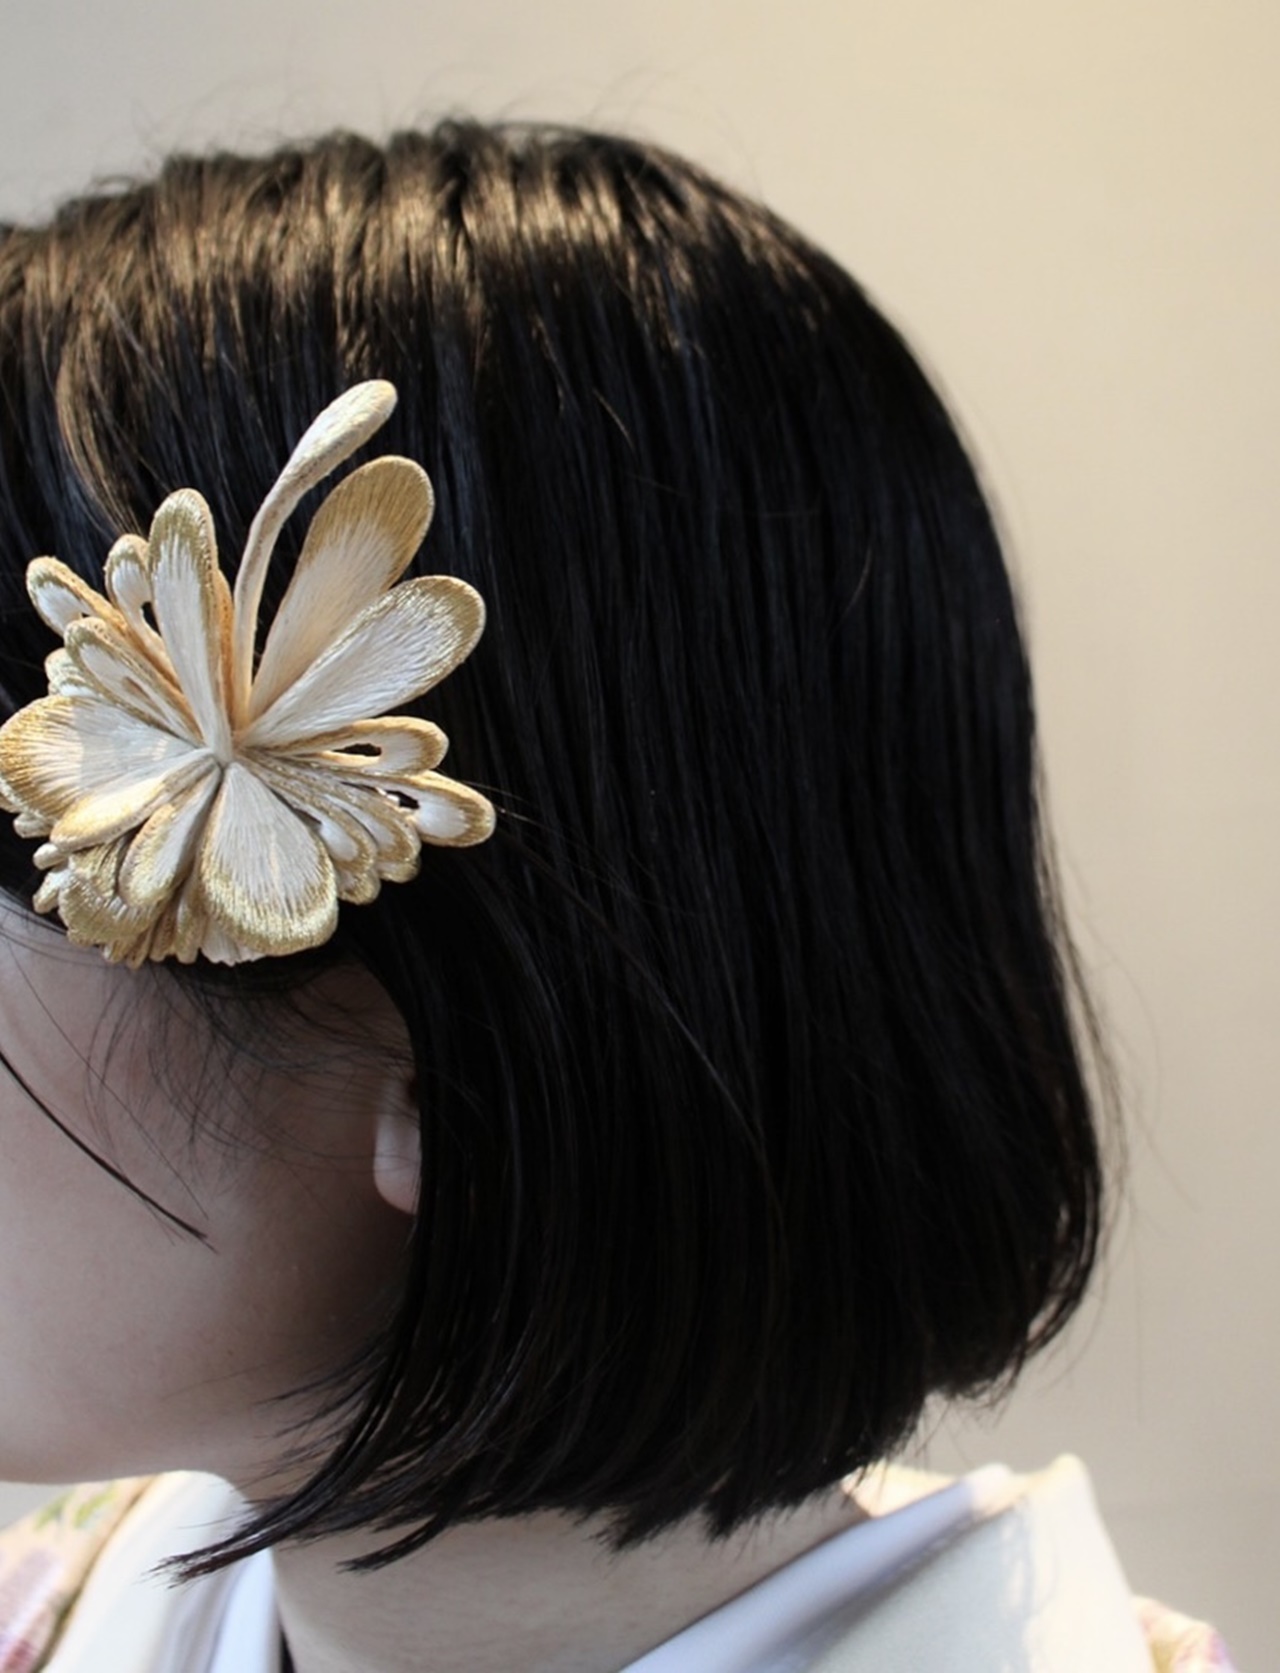 emi takazawaの結魅は、空想のお花をモチーフにしたヘッドアクセサリーで、古典的な色打掛を洗練された印象へと見せてくれます